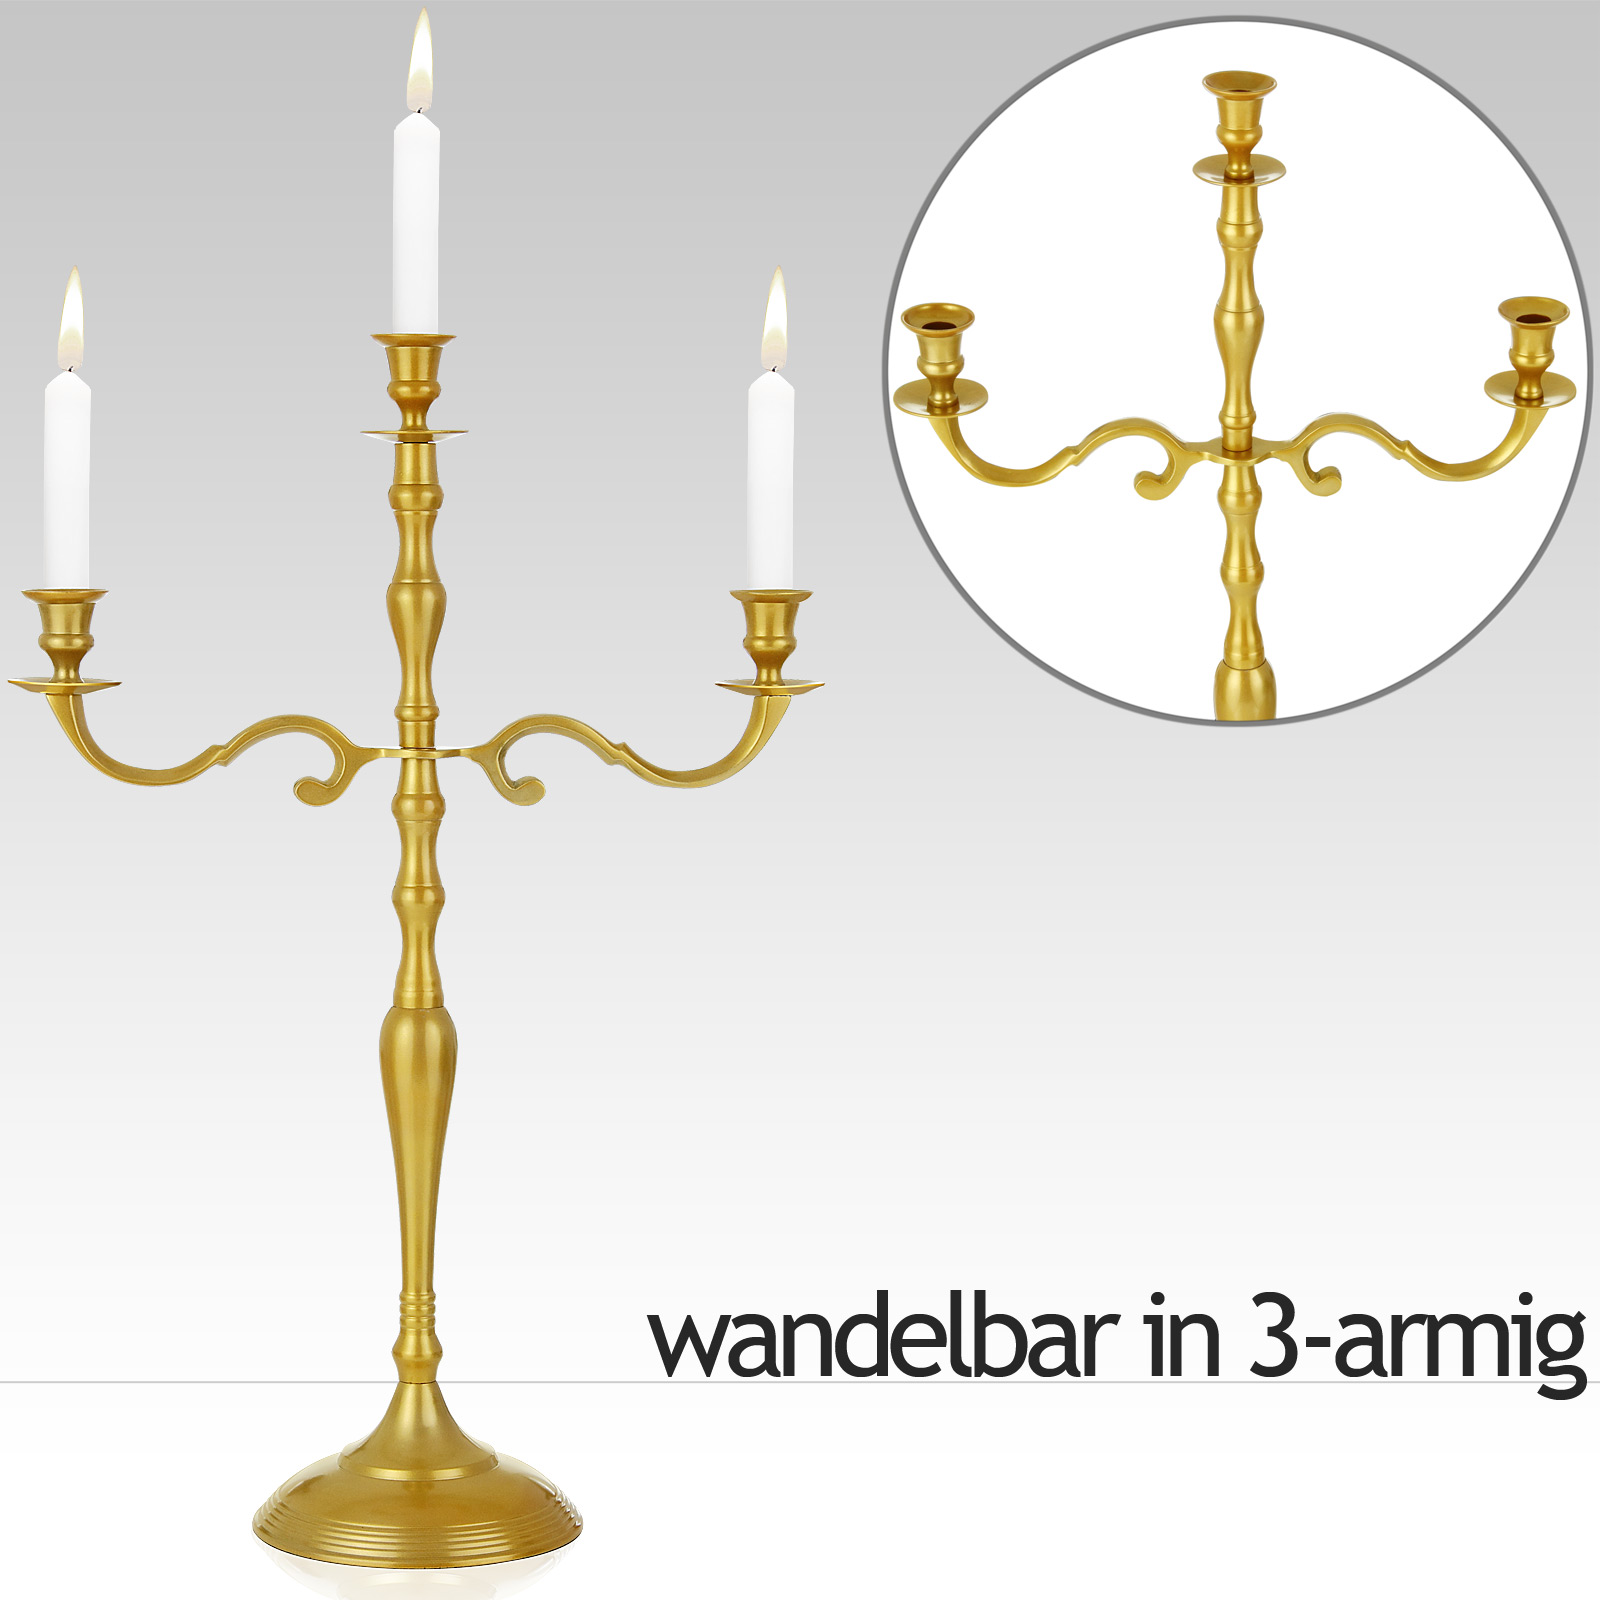 Deuba Candlestick Holder 5-armed Golden-Look Candelabra Candleholder Chandeliers Height 60 cm … 